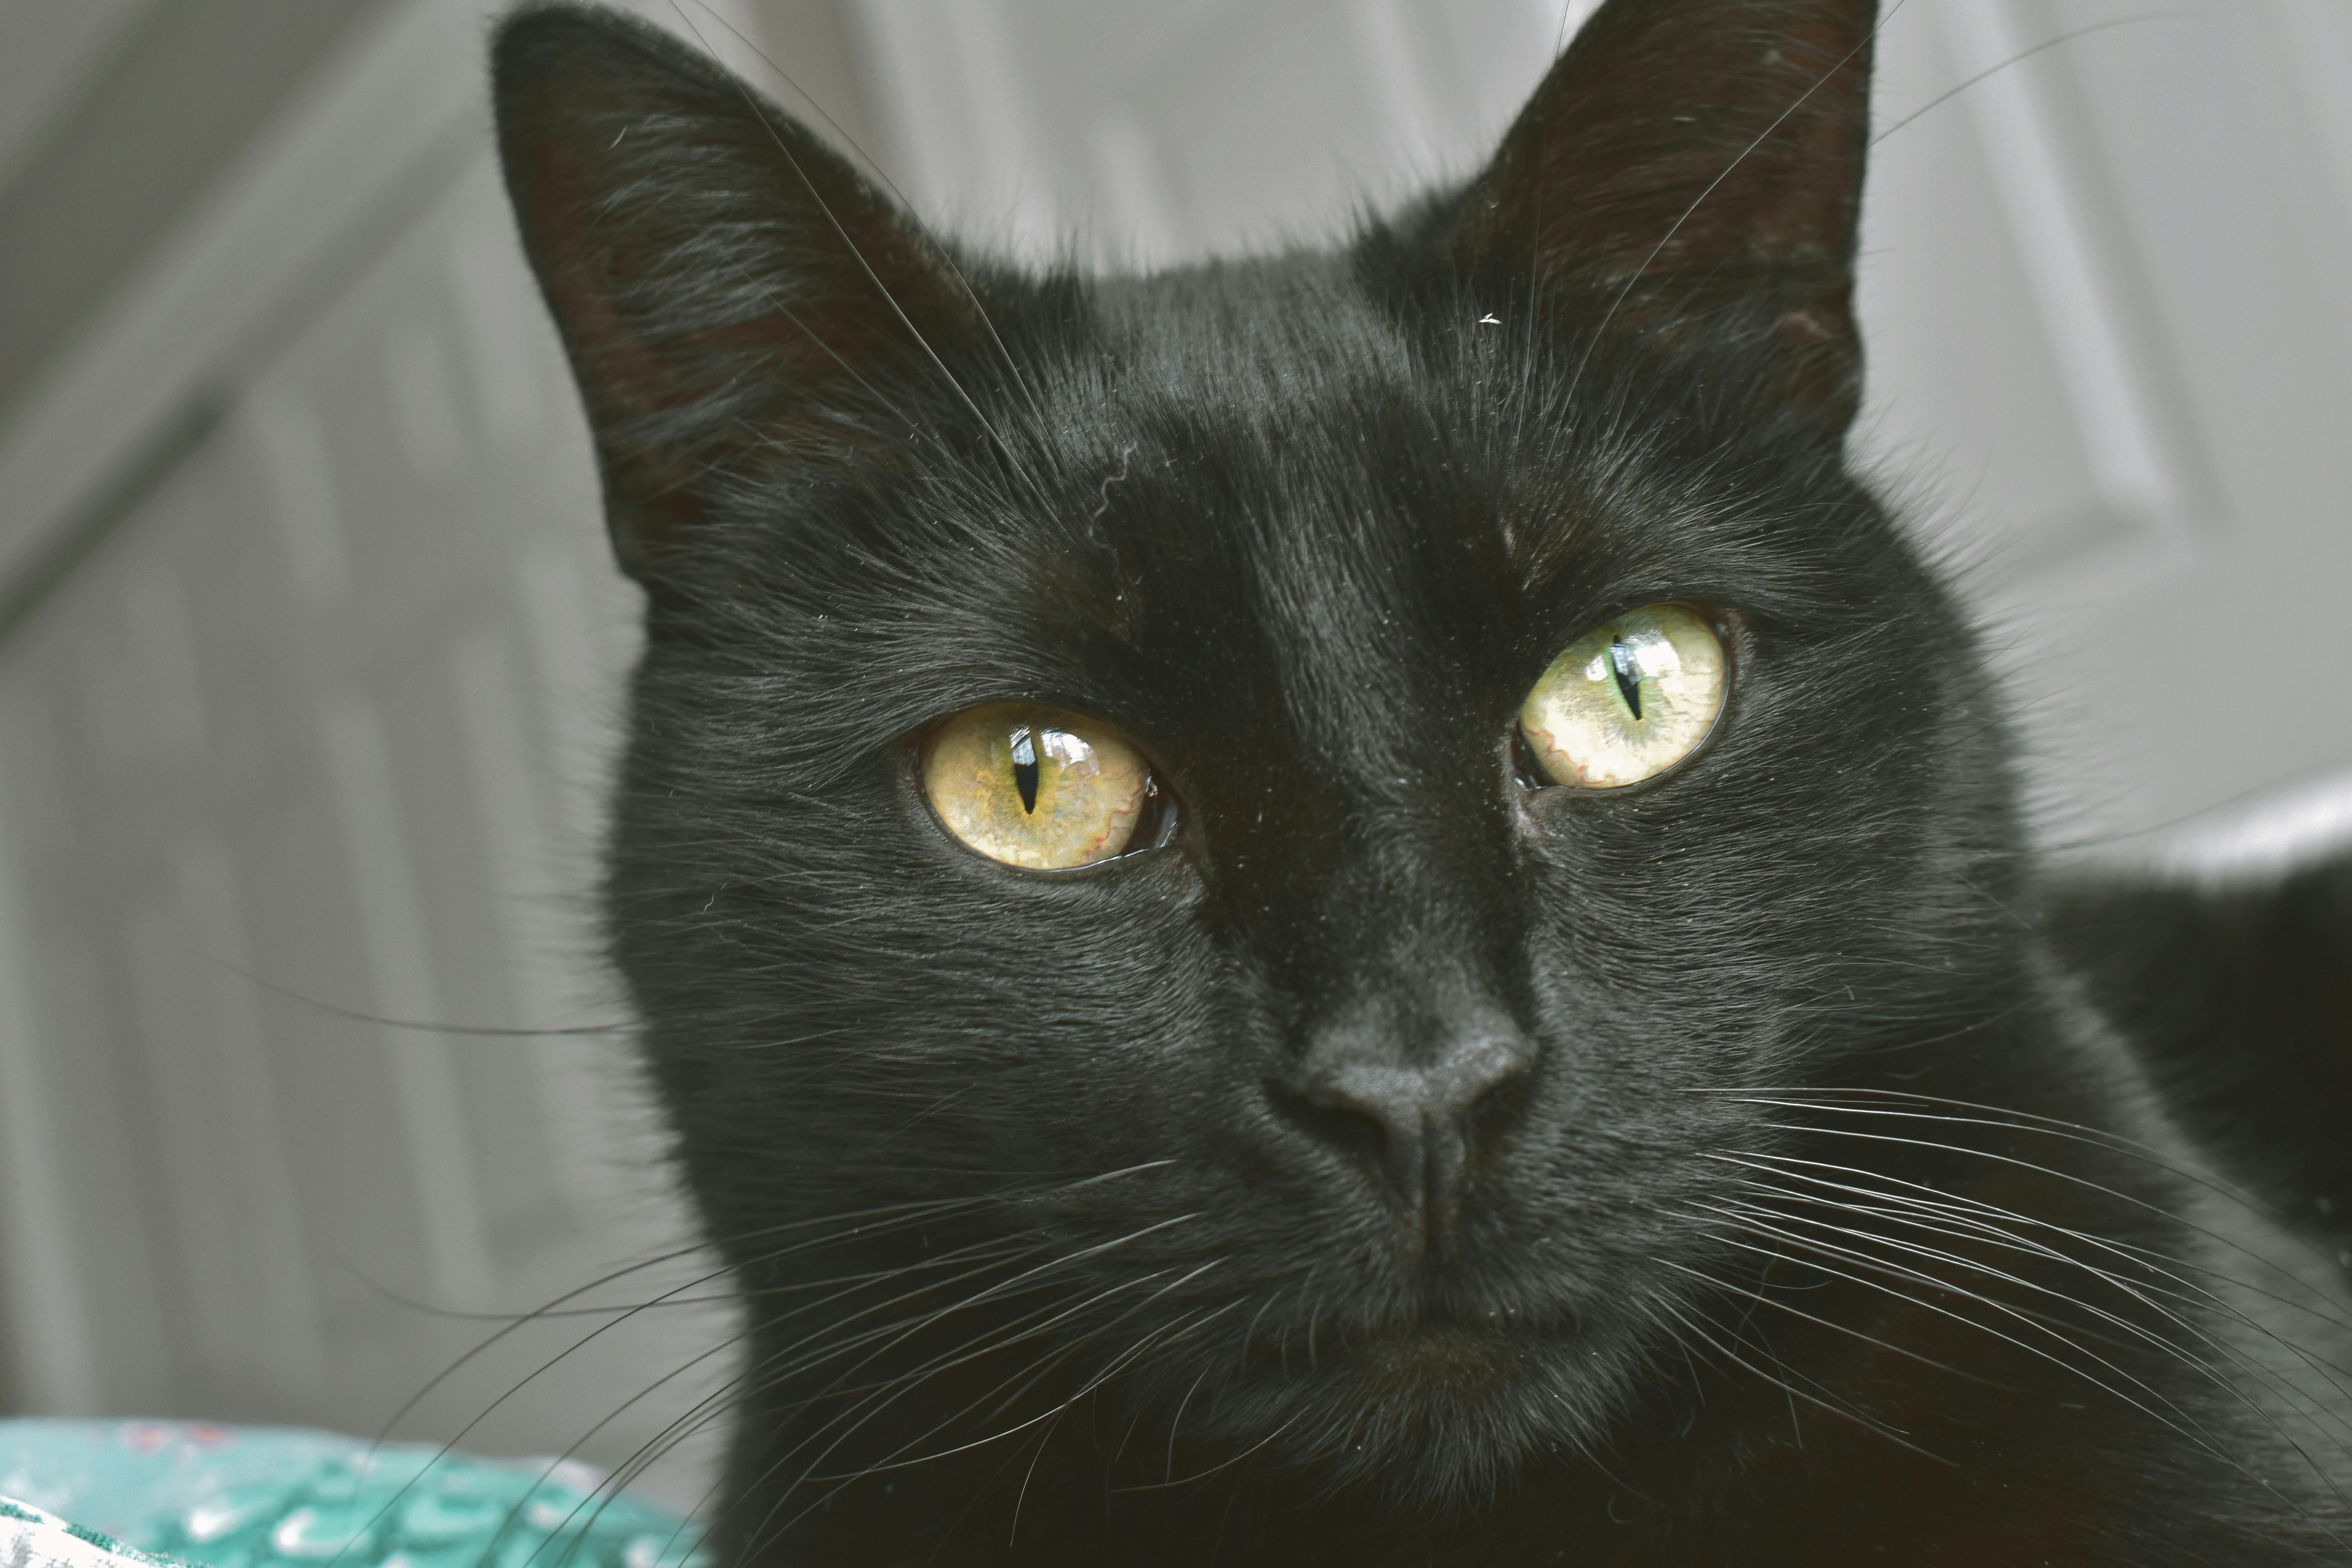 Free stock photo of #cat #black #kitty #animal #cute #aesthetic #photo